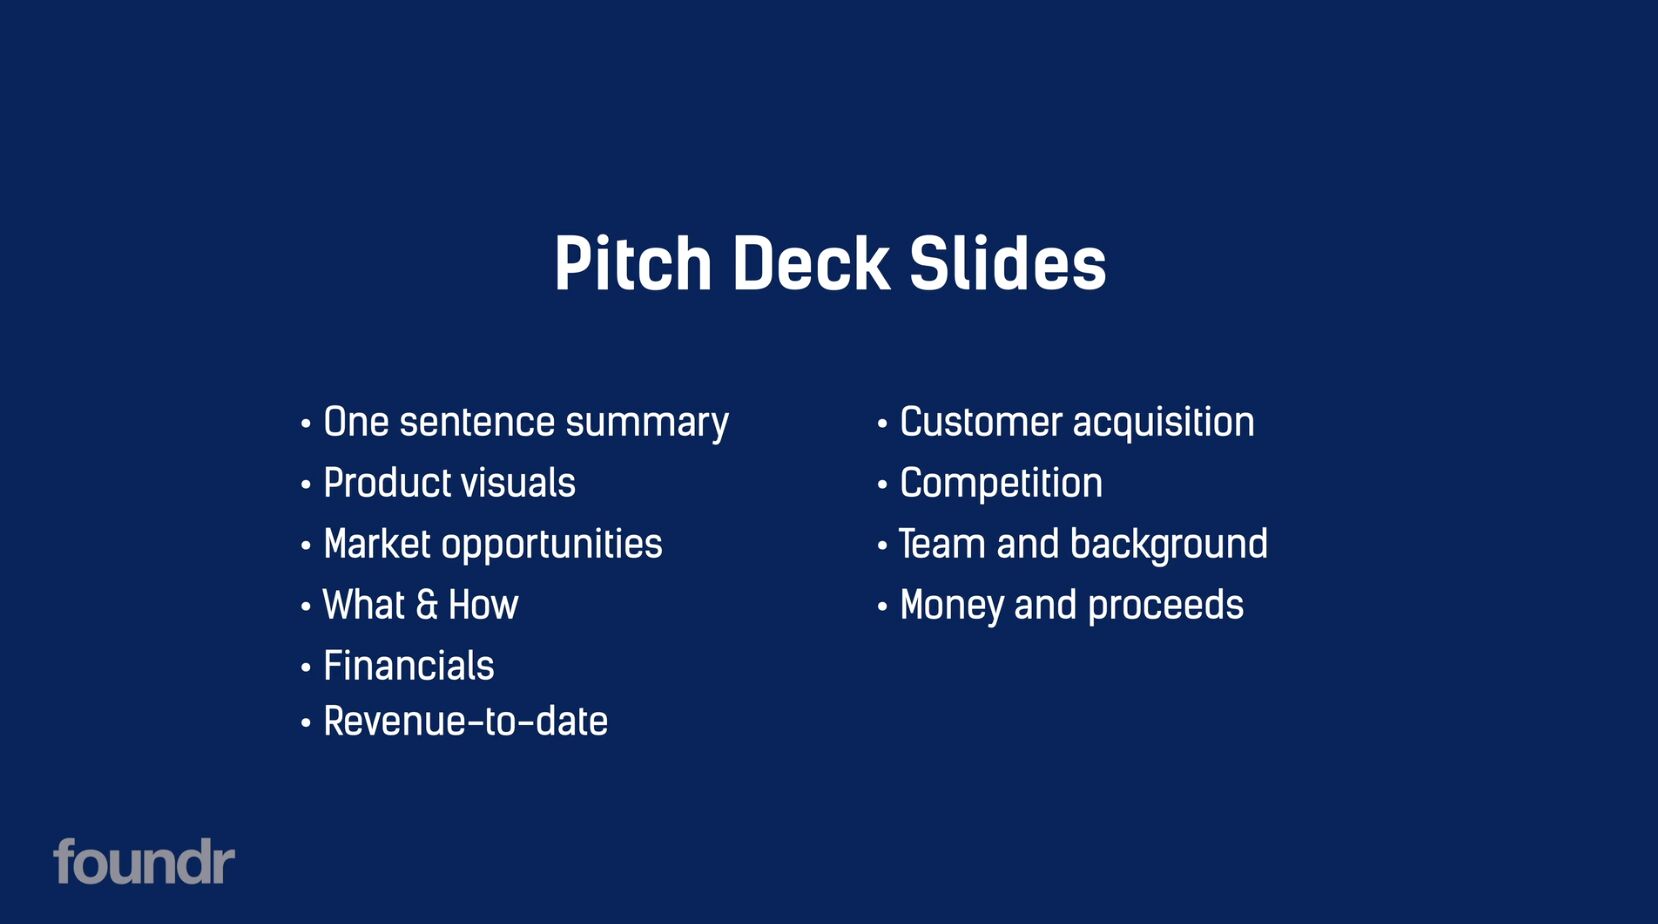 Pitch deck slides